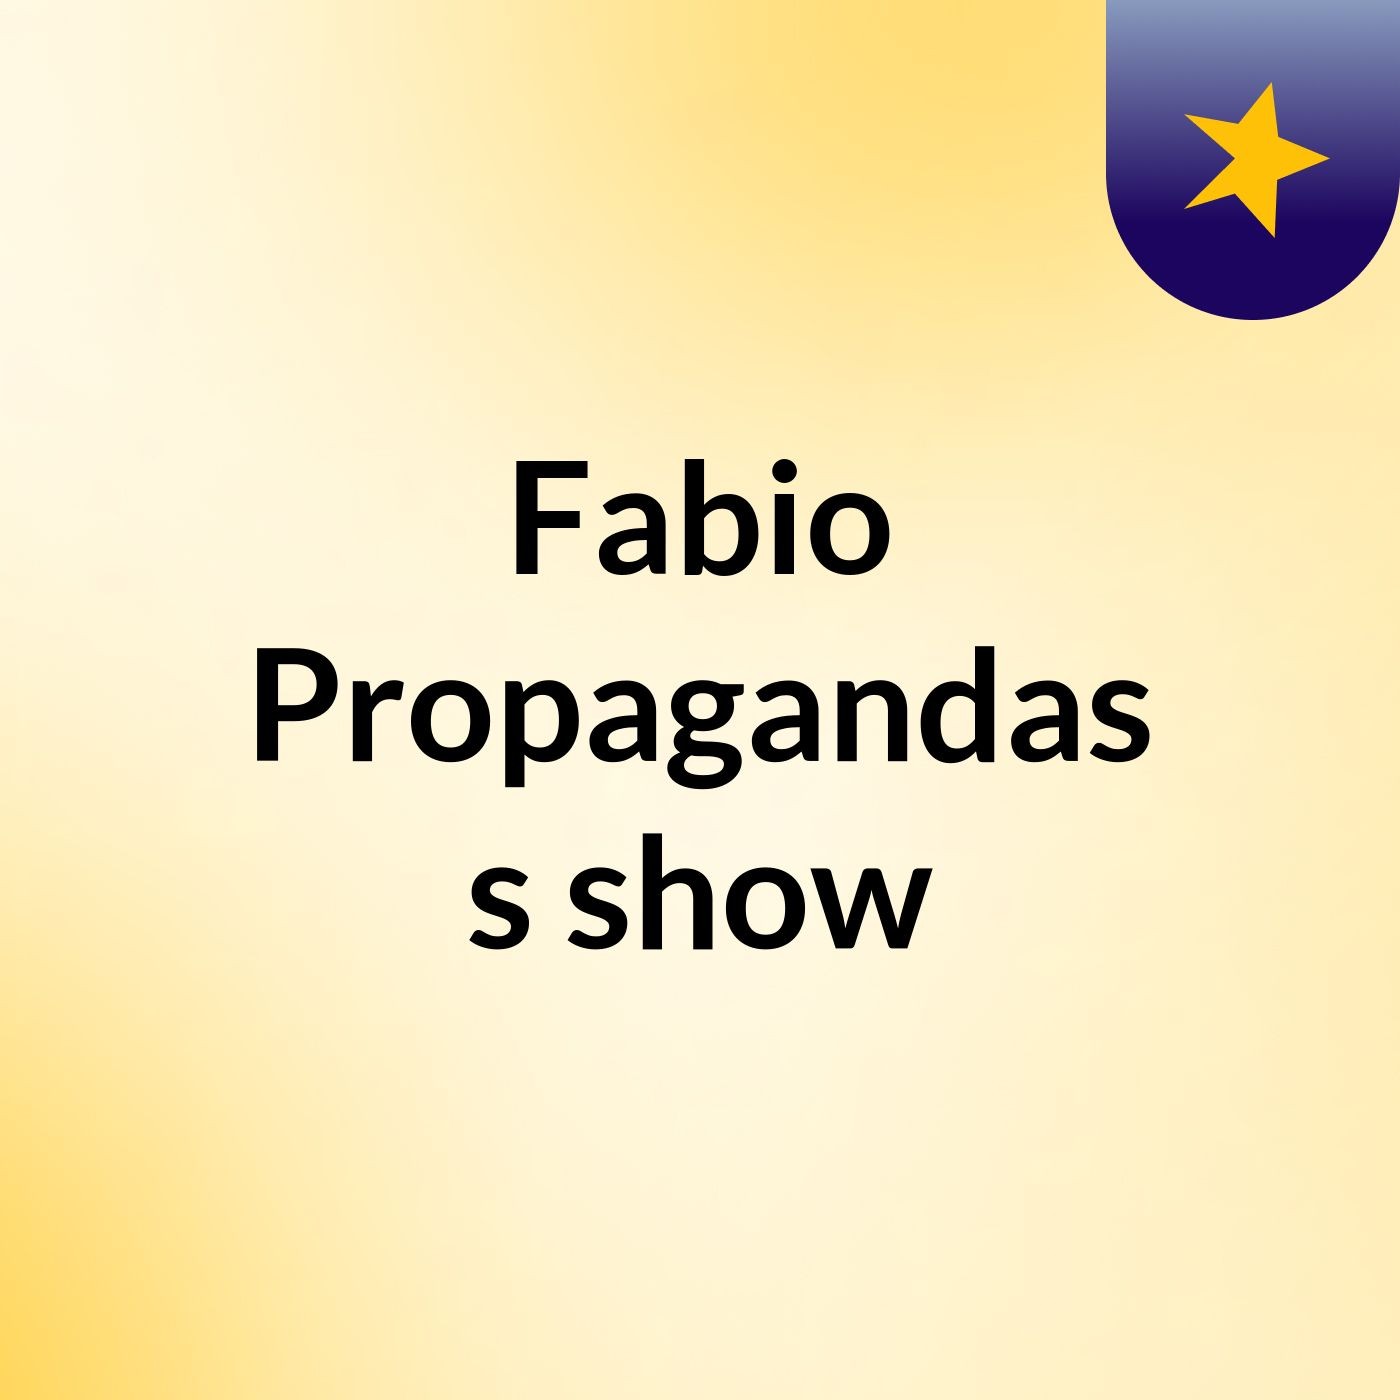 Fabio Propagandas's show